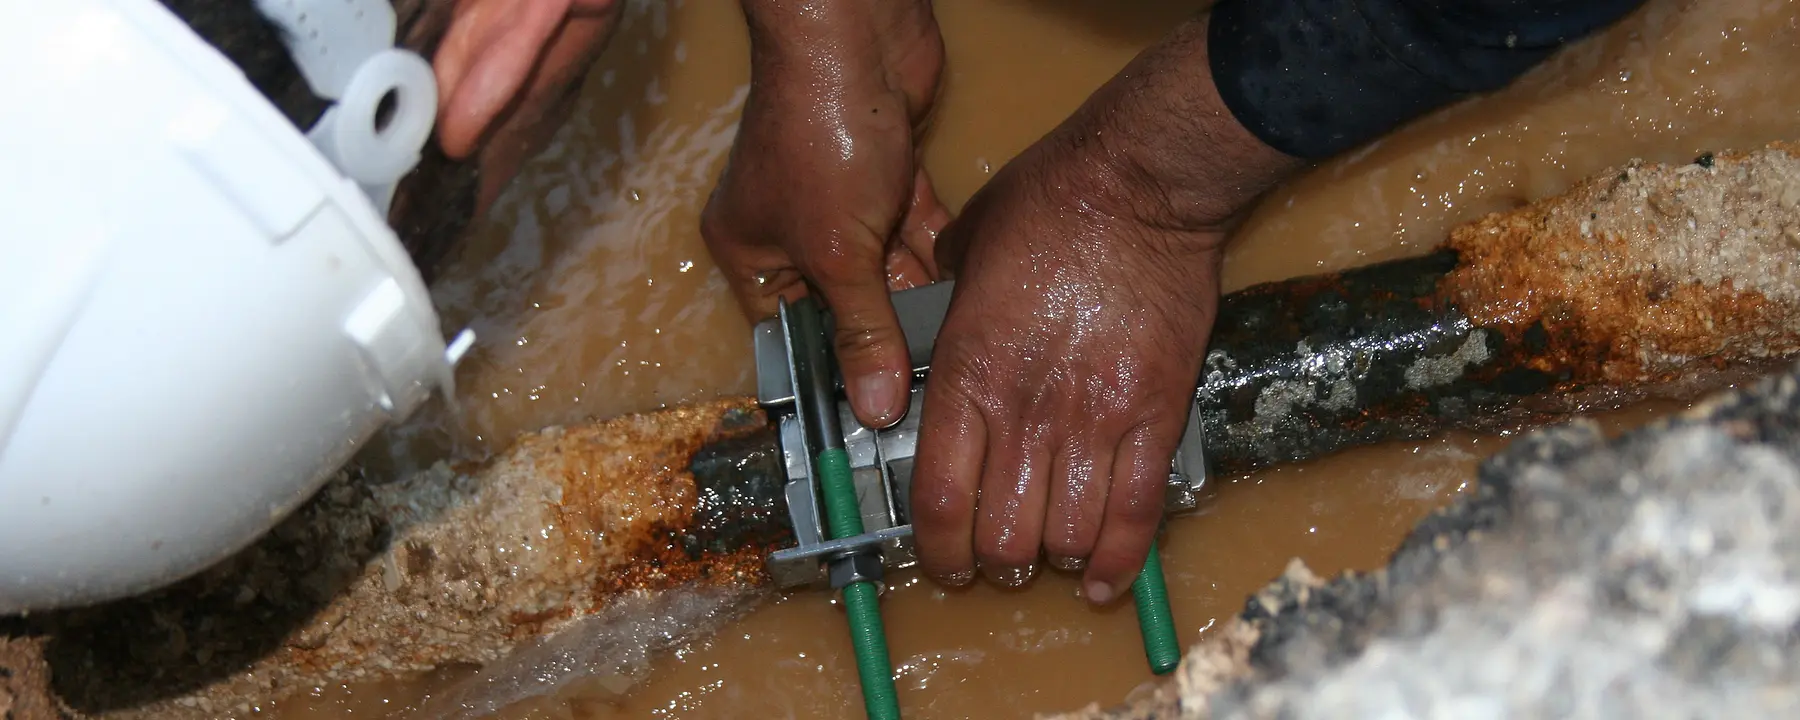 A man works on a water main in Jordan.